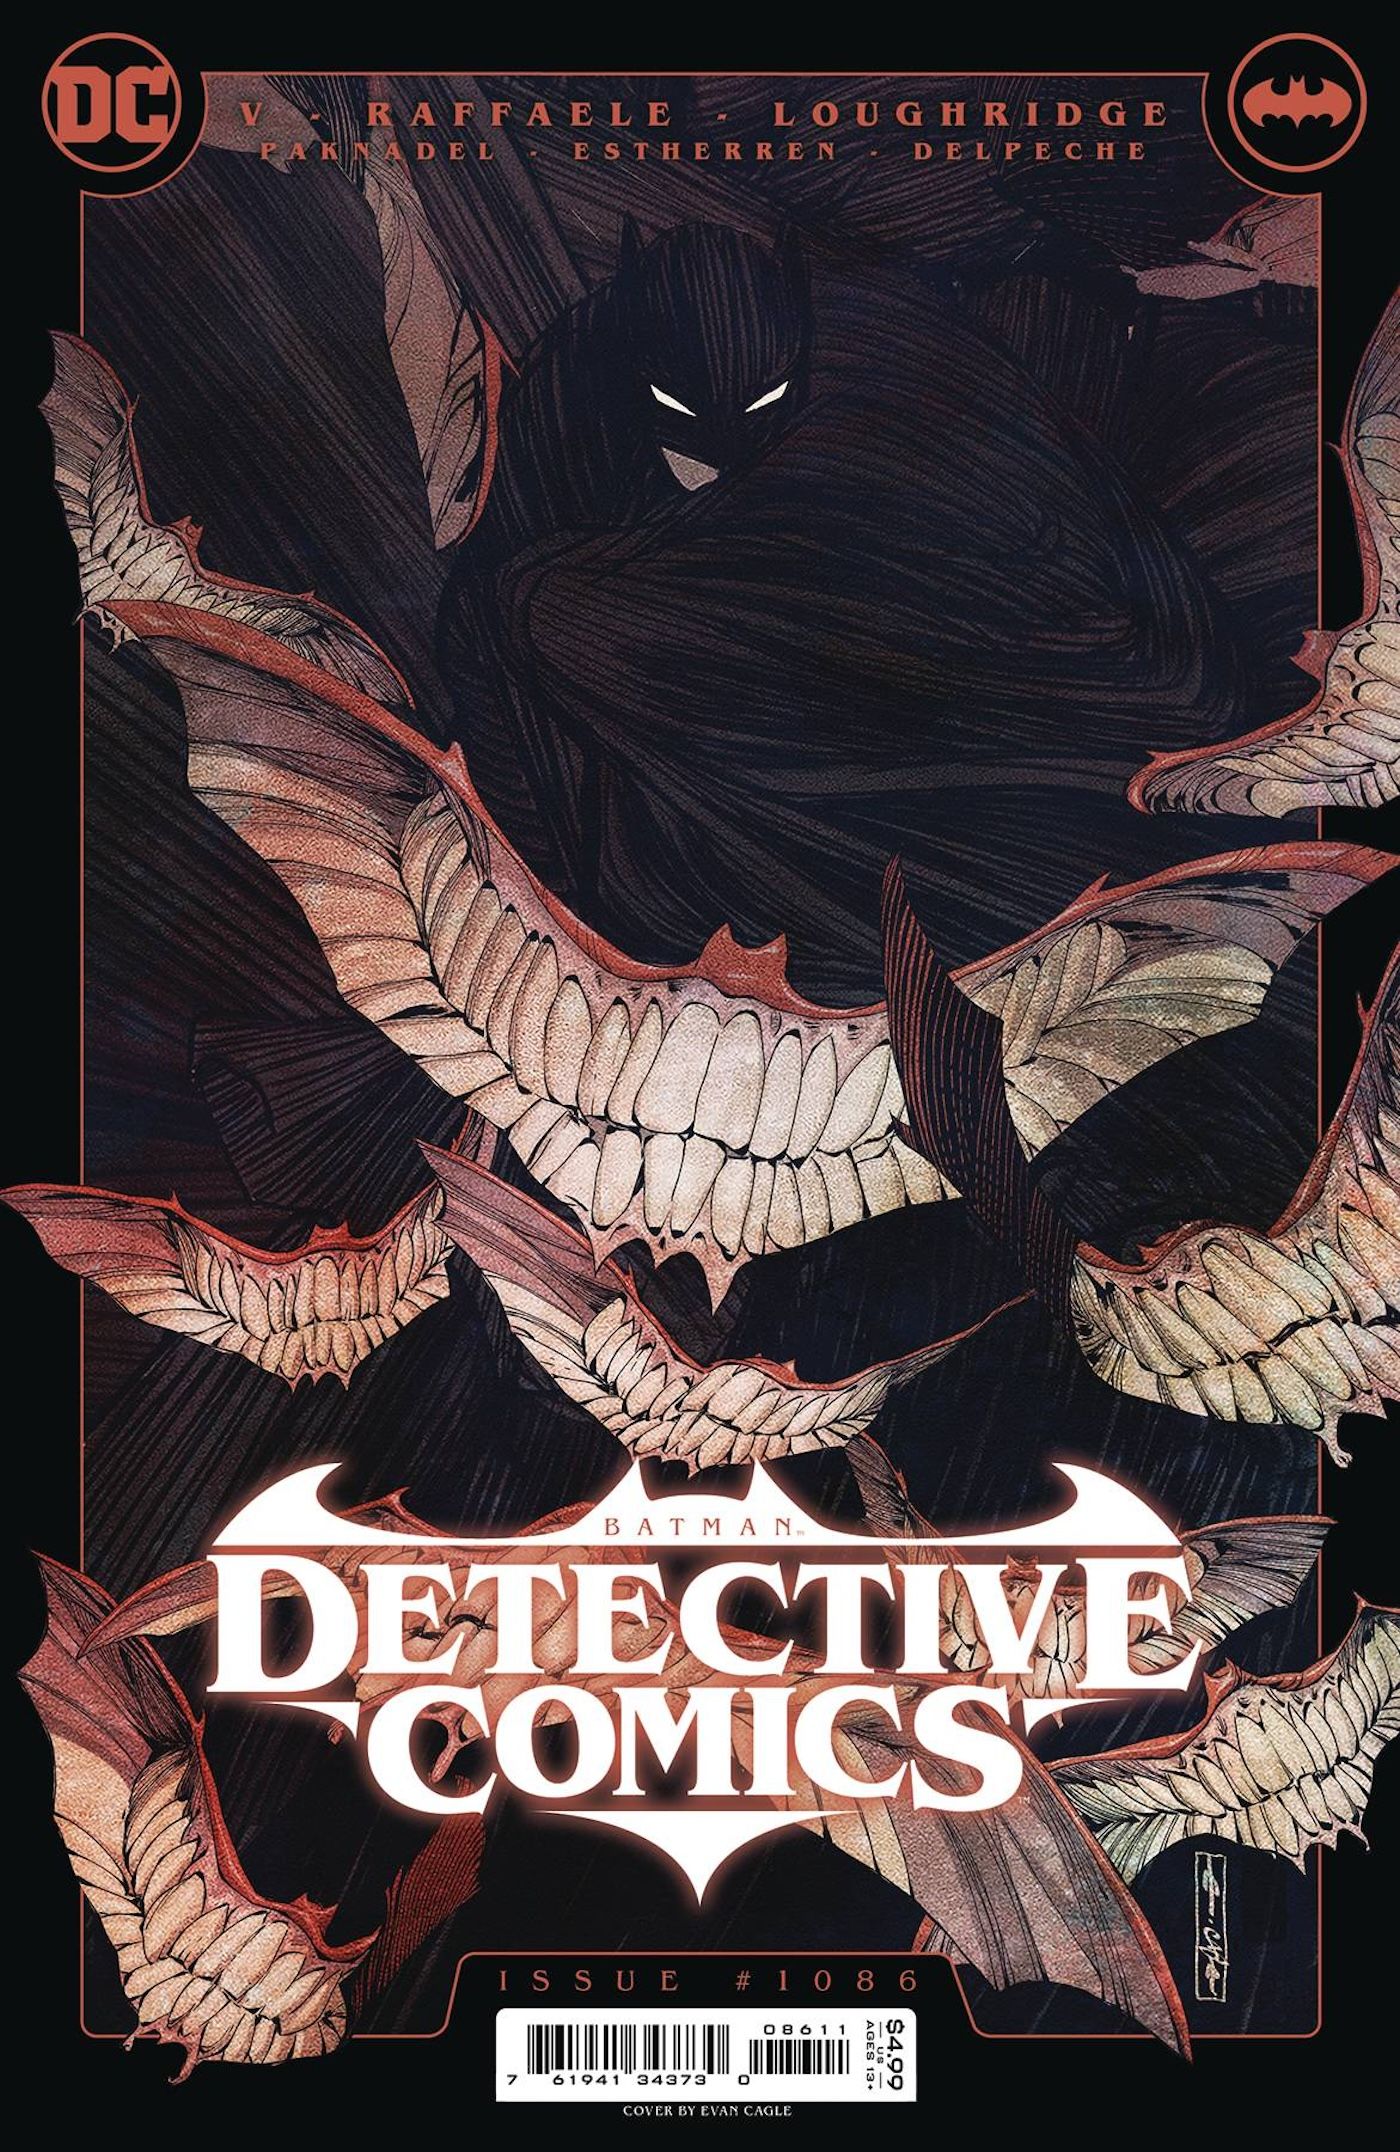 Capa principal da Detective Comics 1086: Batman nas sombras cercado por sorrisos em forma de morcego.